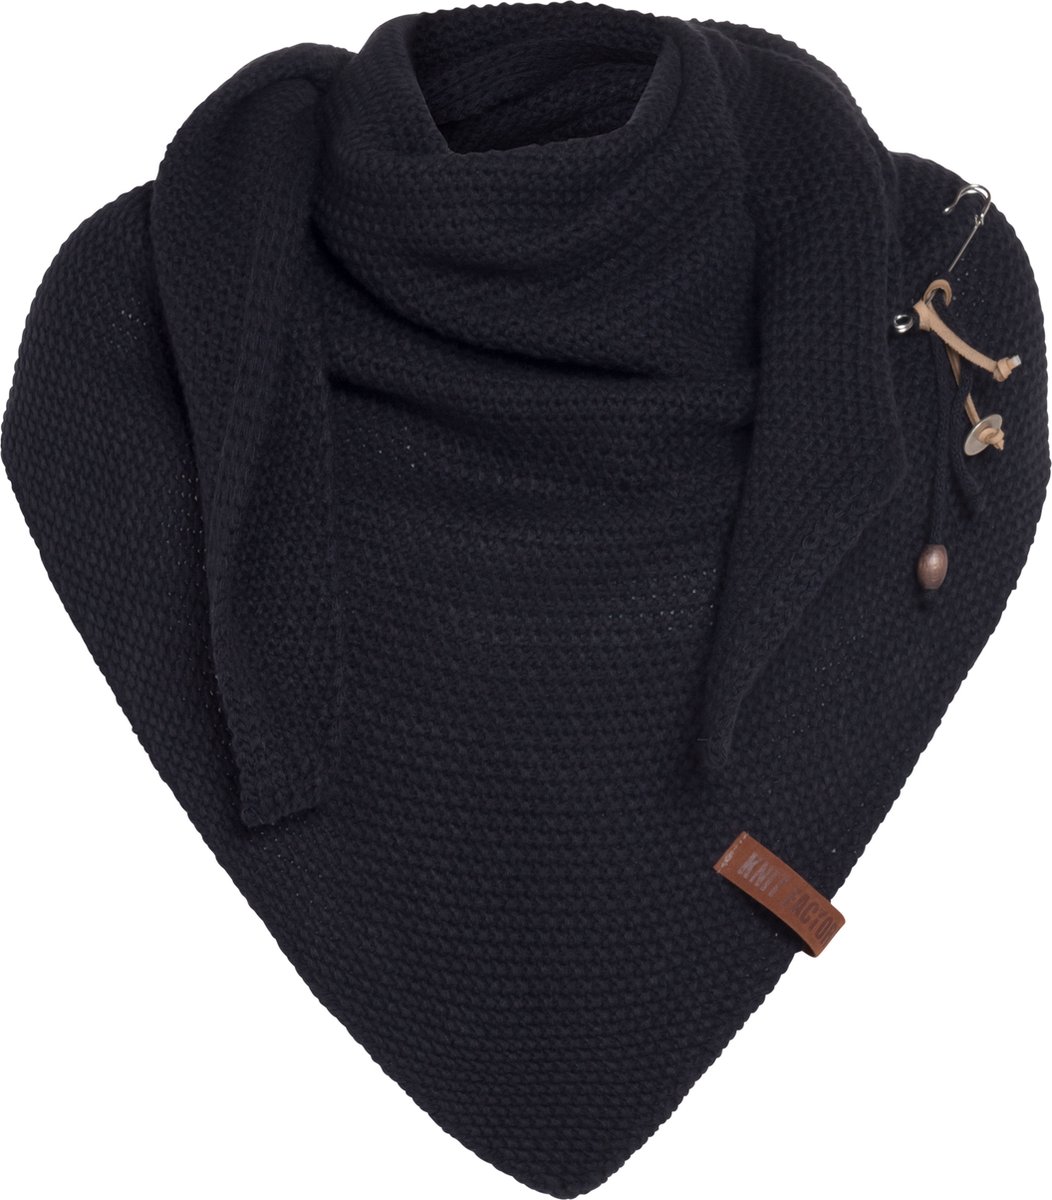 Knit Factory Coco Gebreide Omslagdoek - Driehoek Sjaal Dames - Dames sjaal - Wintersjaal - Stola - Wollen sjaal - Donkerblauwe sjaal - Navy - 190x85 cm - Inclusief sierspeld